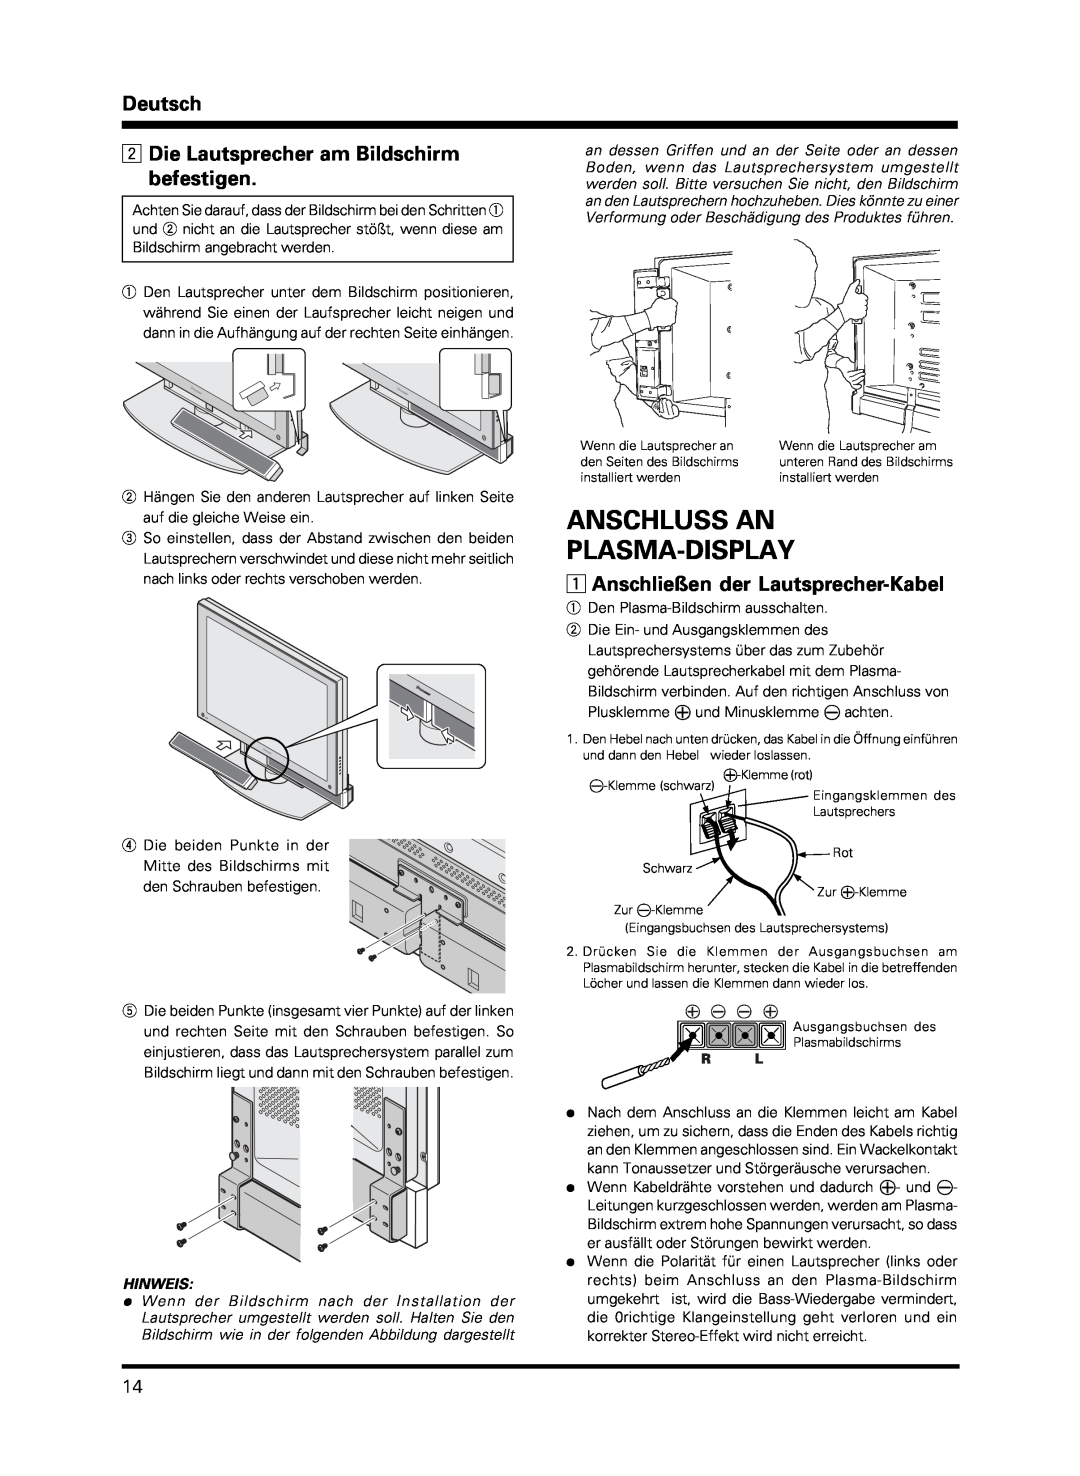 Pioneer PDP-S13-LR manual Anschluss An Plasma-Display, Deutsch 2 Die Lautsprecher am Bildschirm befestigen, Hinweis 